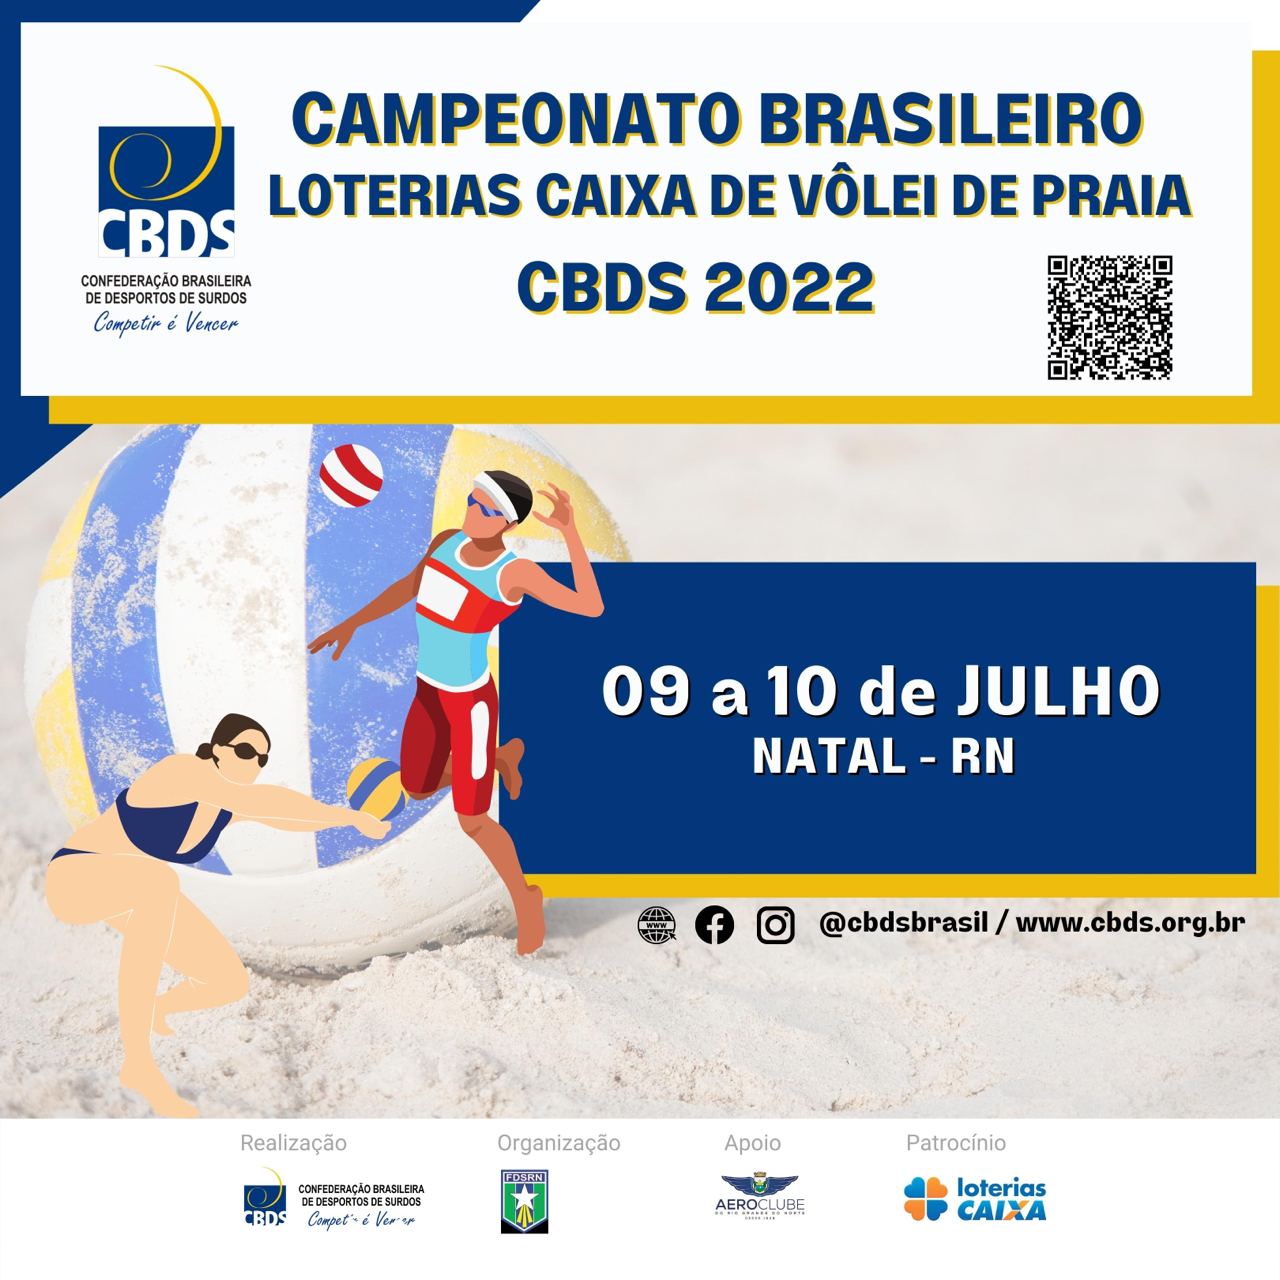 Campeonato Brasileiro Loterias Caixa de Vôlei de Praia - Rn 2022